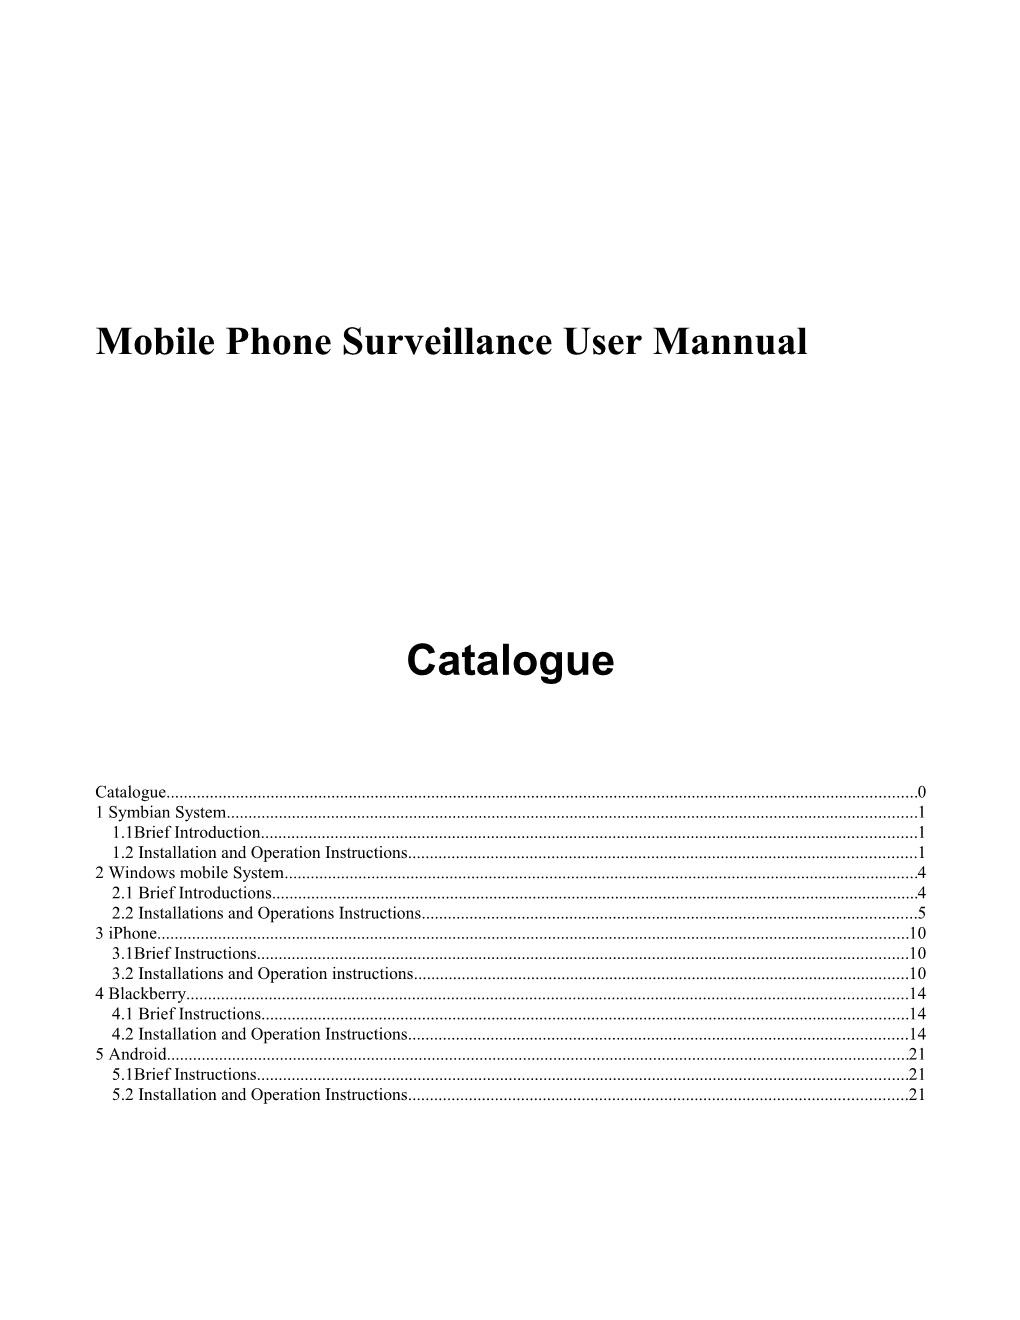 Mobile Phone Surveillance User Mannual